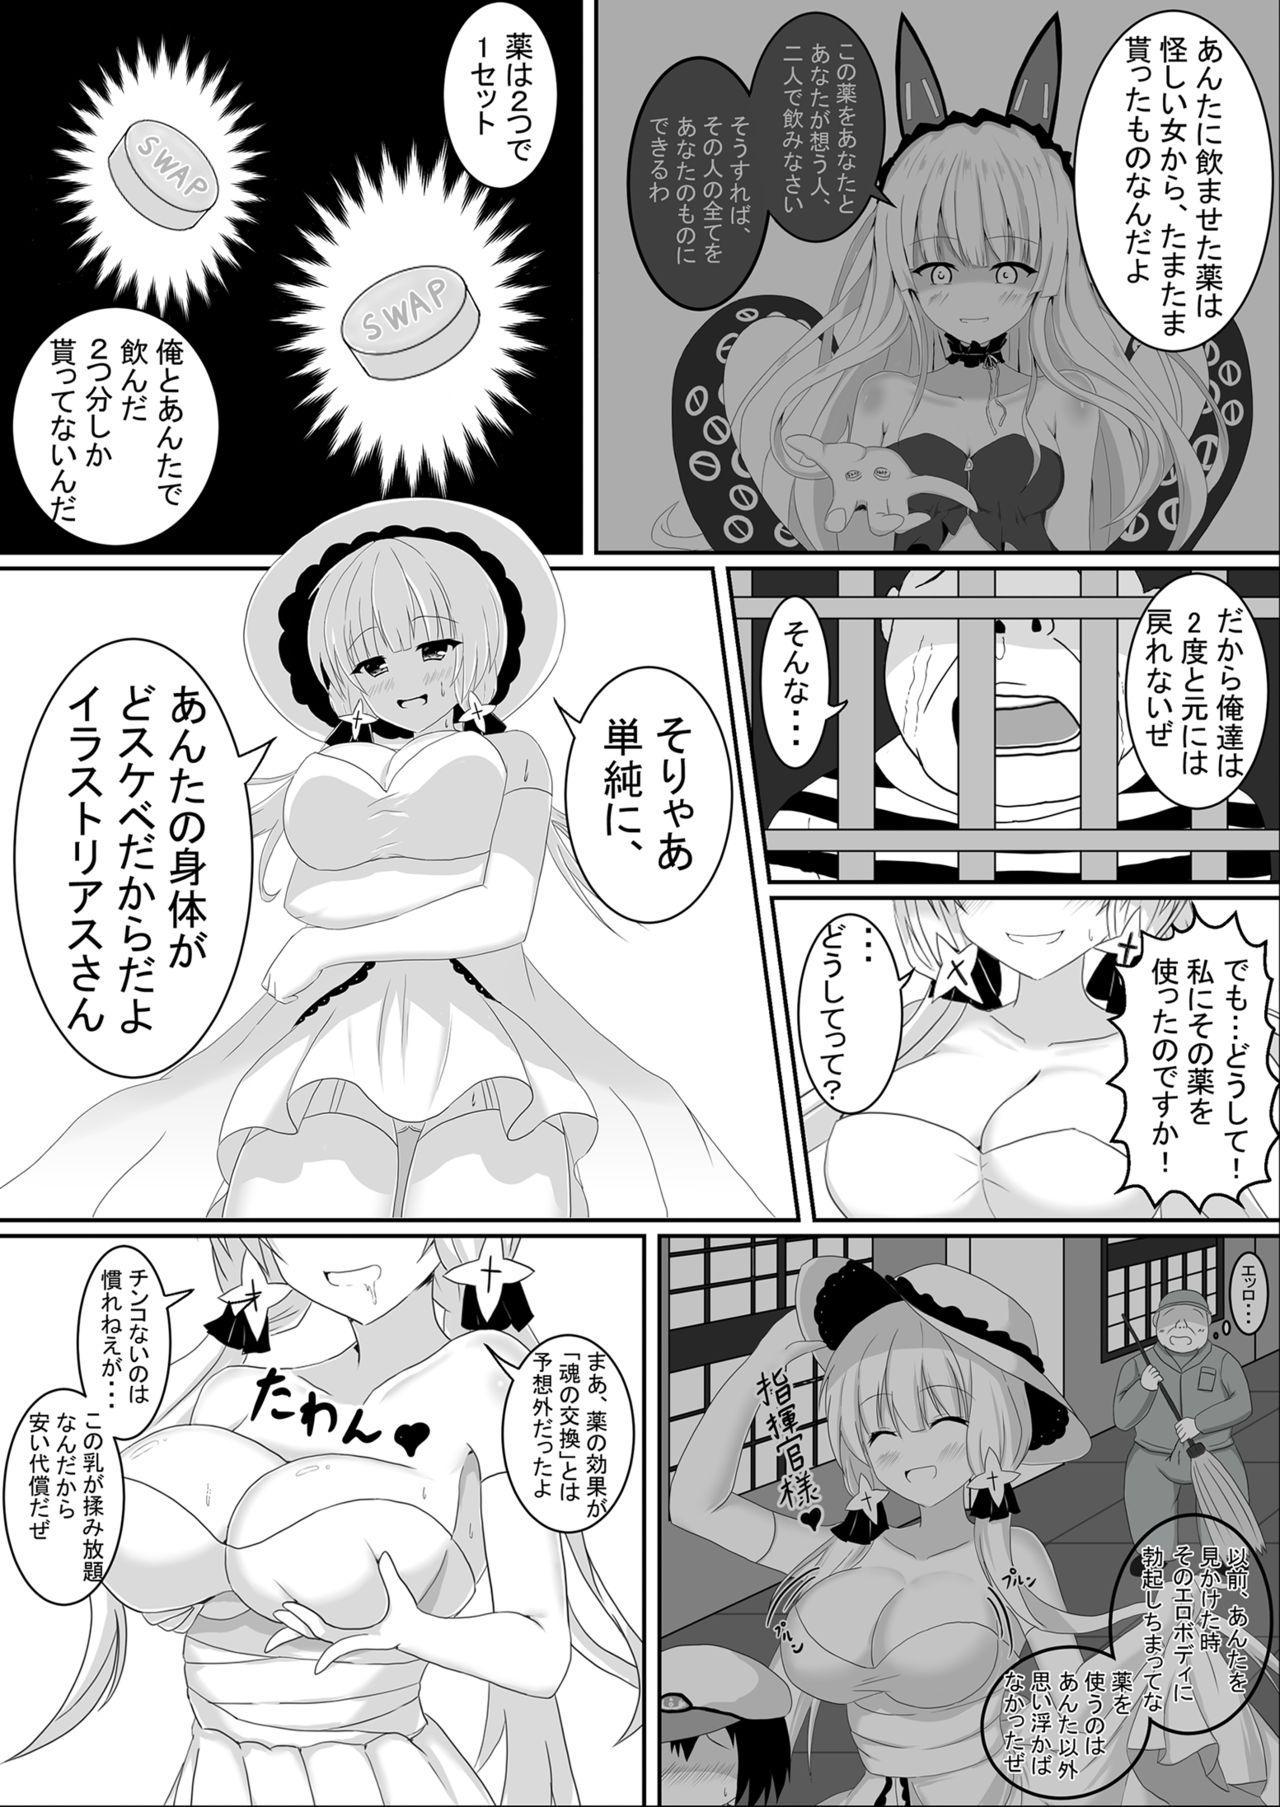 Analplay Irekawari, Hyoui E Fukusuumai 3 - Azur lane Olderwoman - Page 5